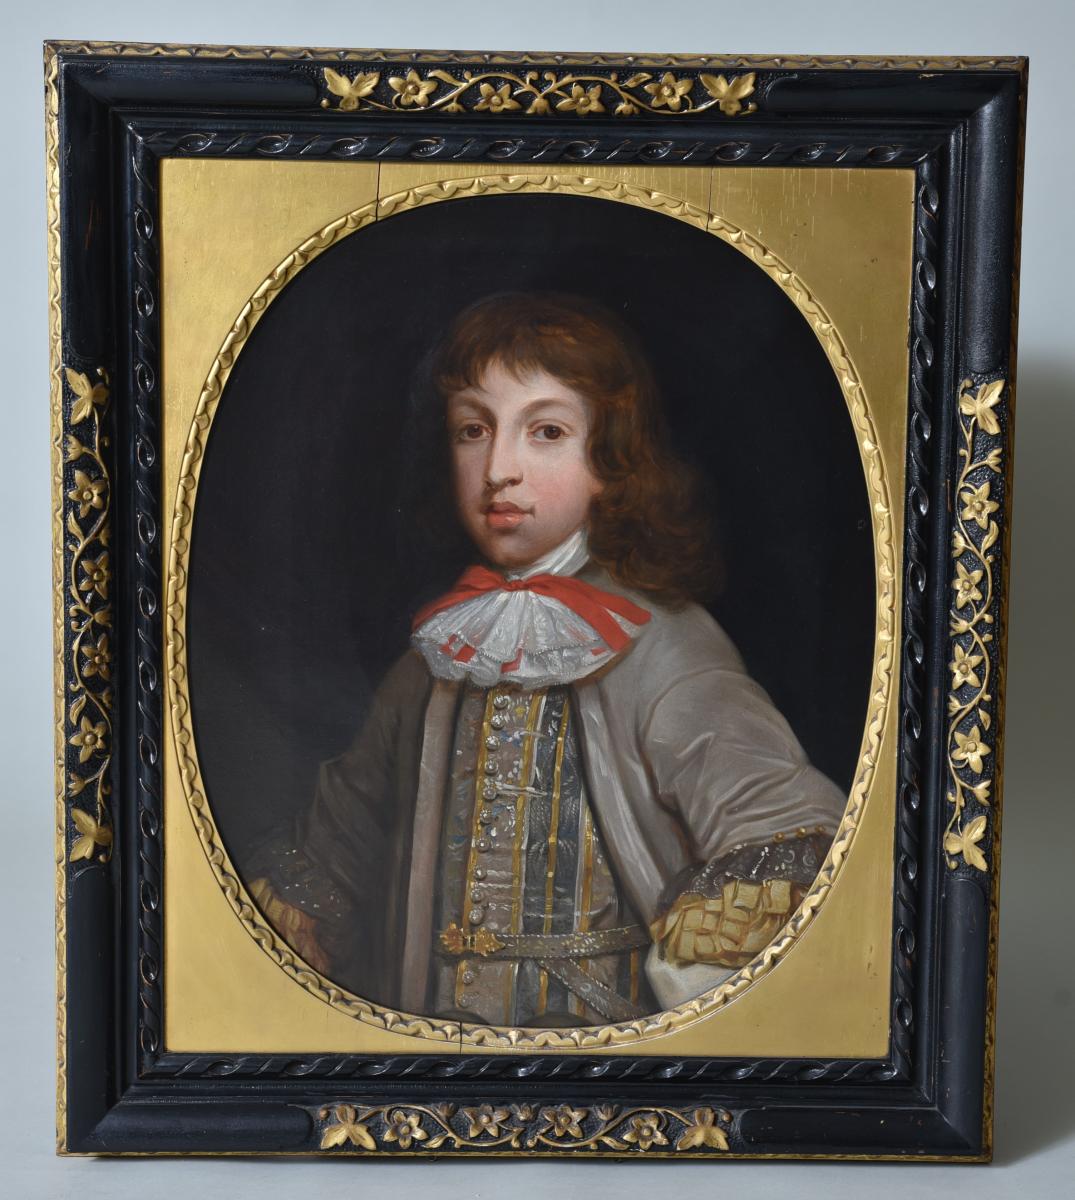 Portrait of Charles Howard of Greystoke Castle